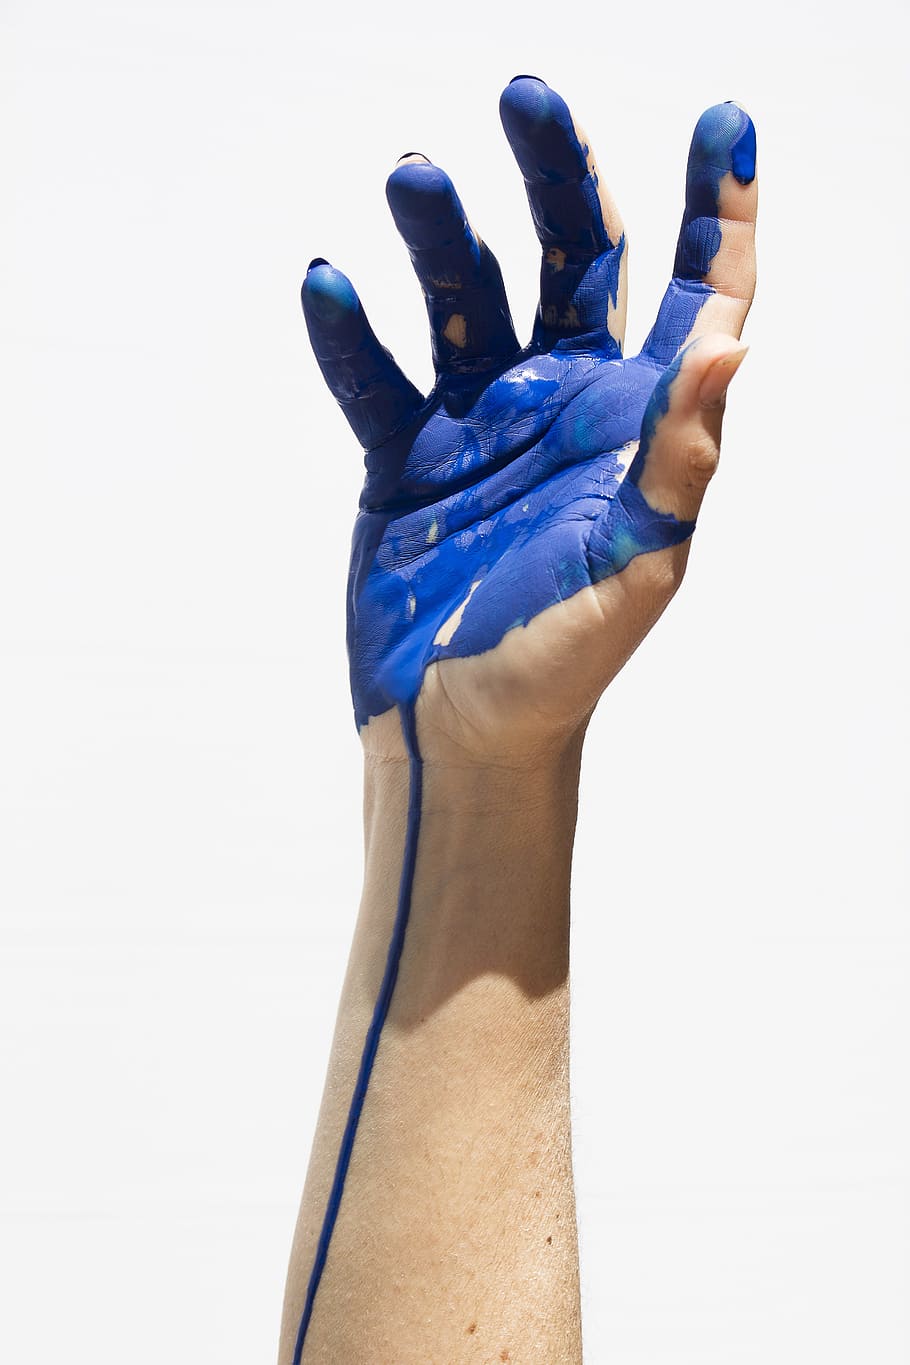 kanan, manusia, tangan, cat, tangan manusia, warna, biru, lukisan, bagian tubuh manusia, gerakan